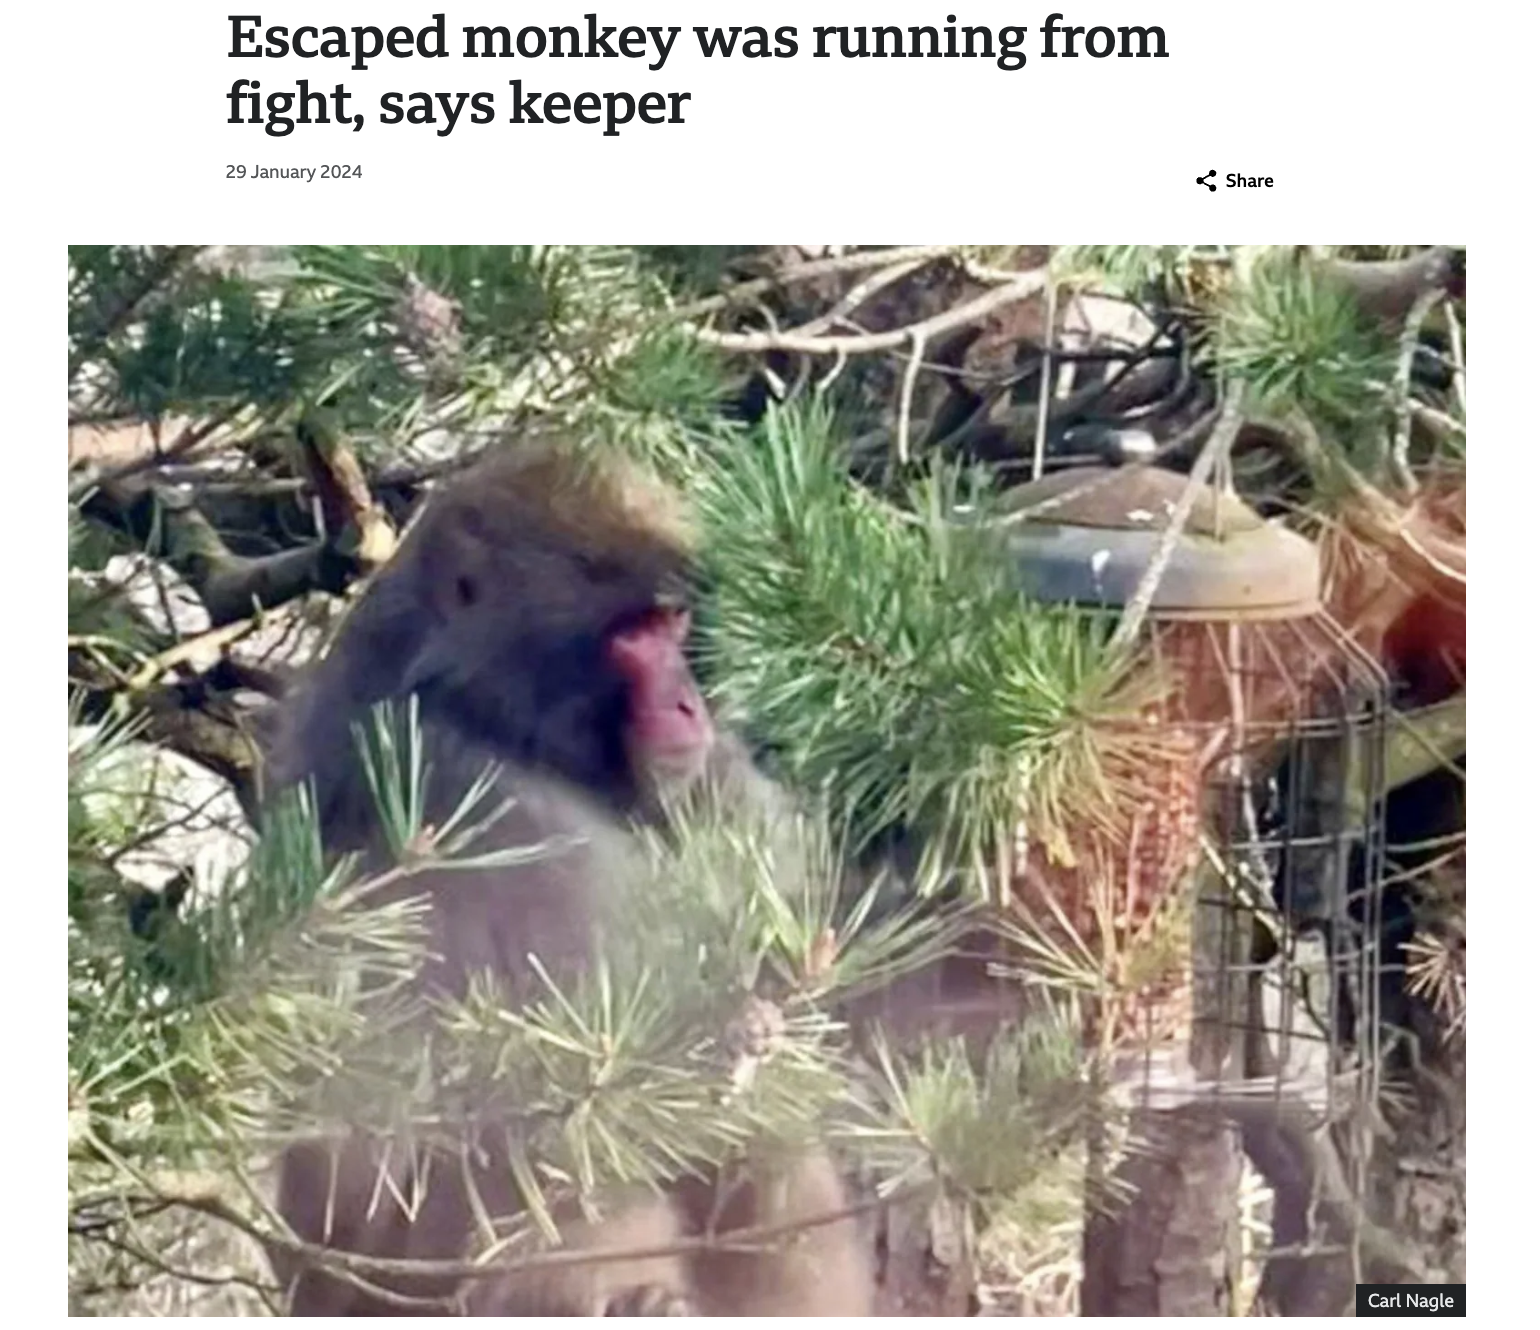 17 Times Bad Monkeys Made the News